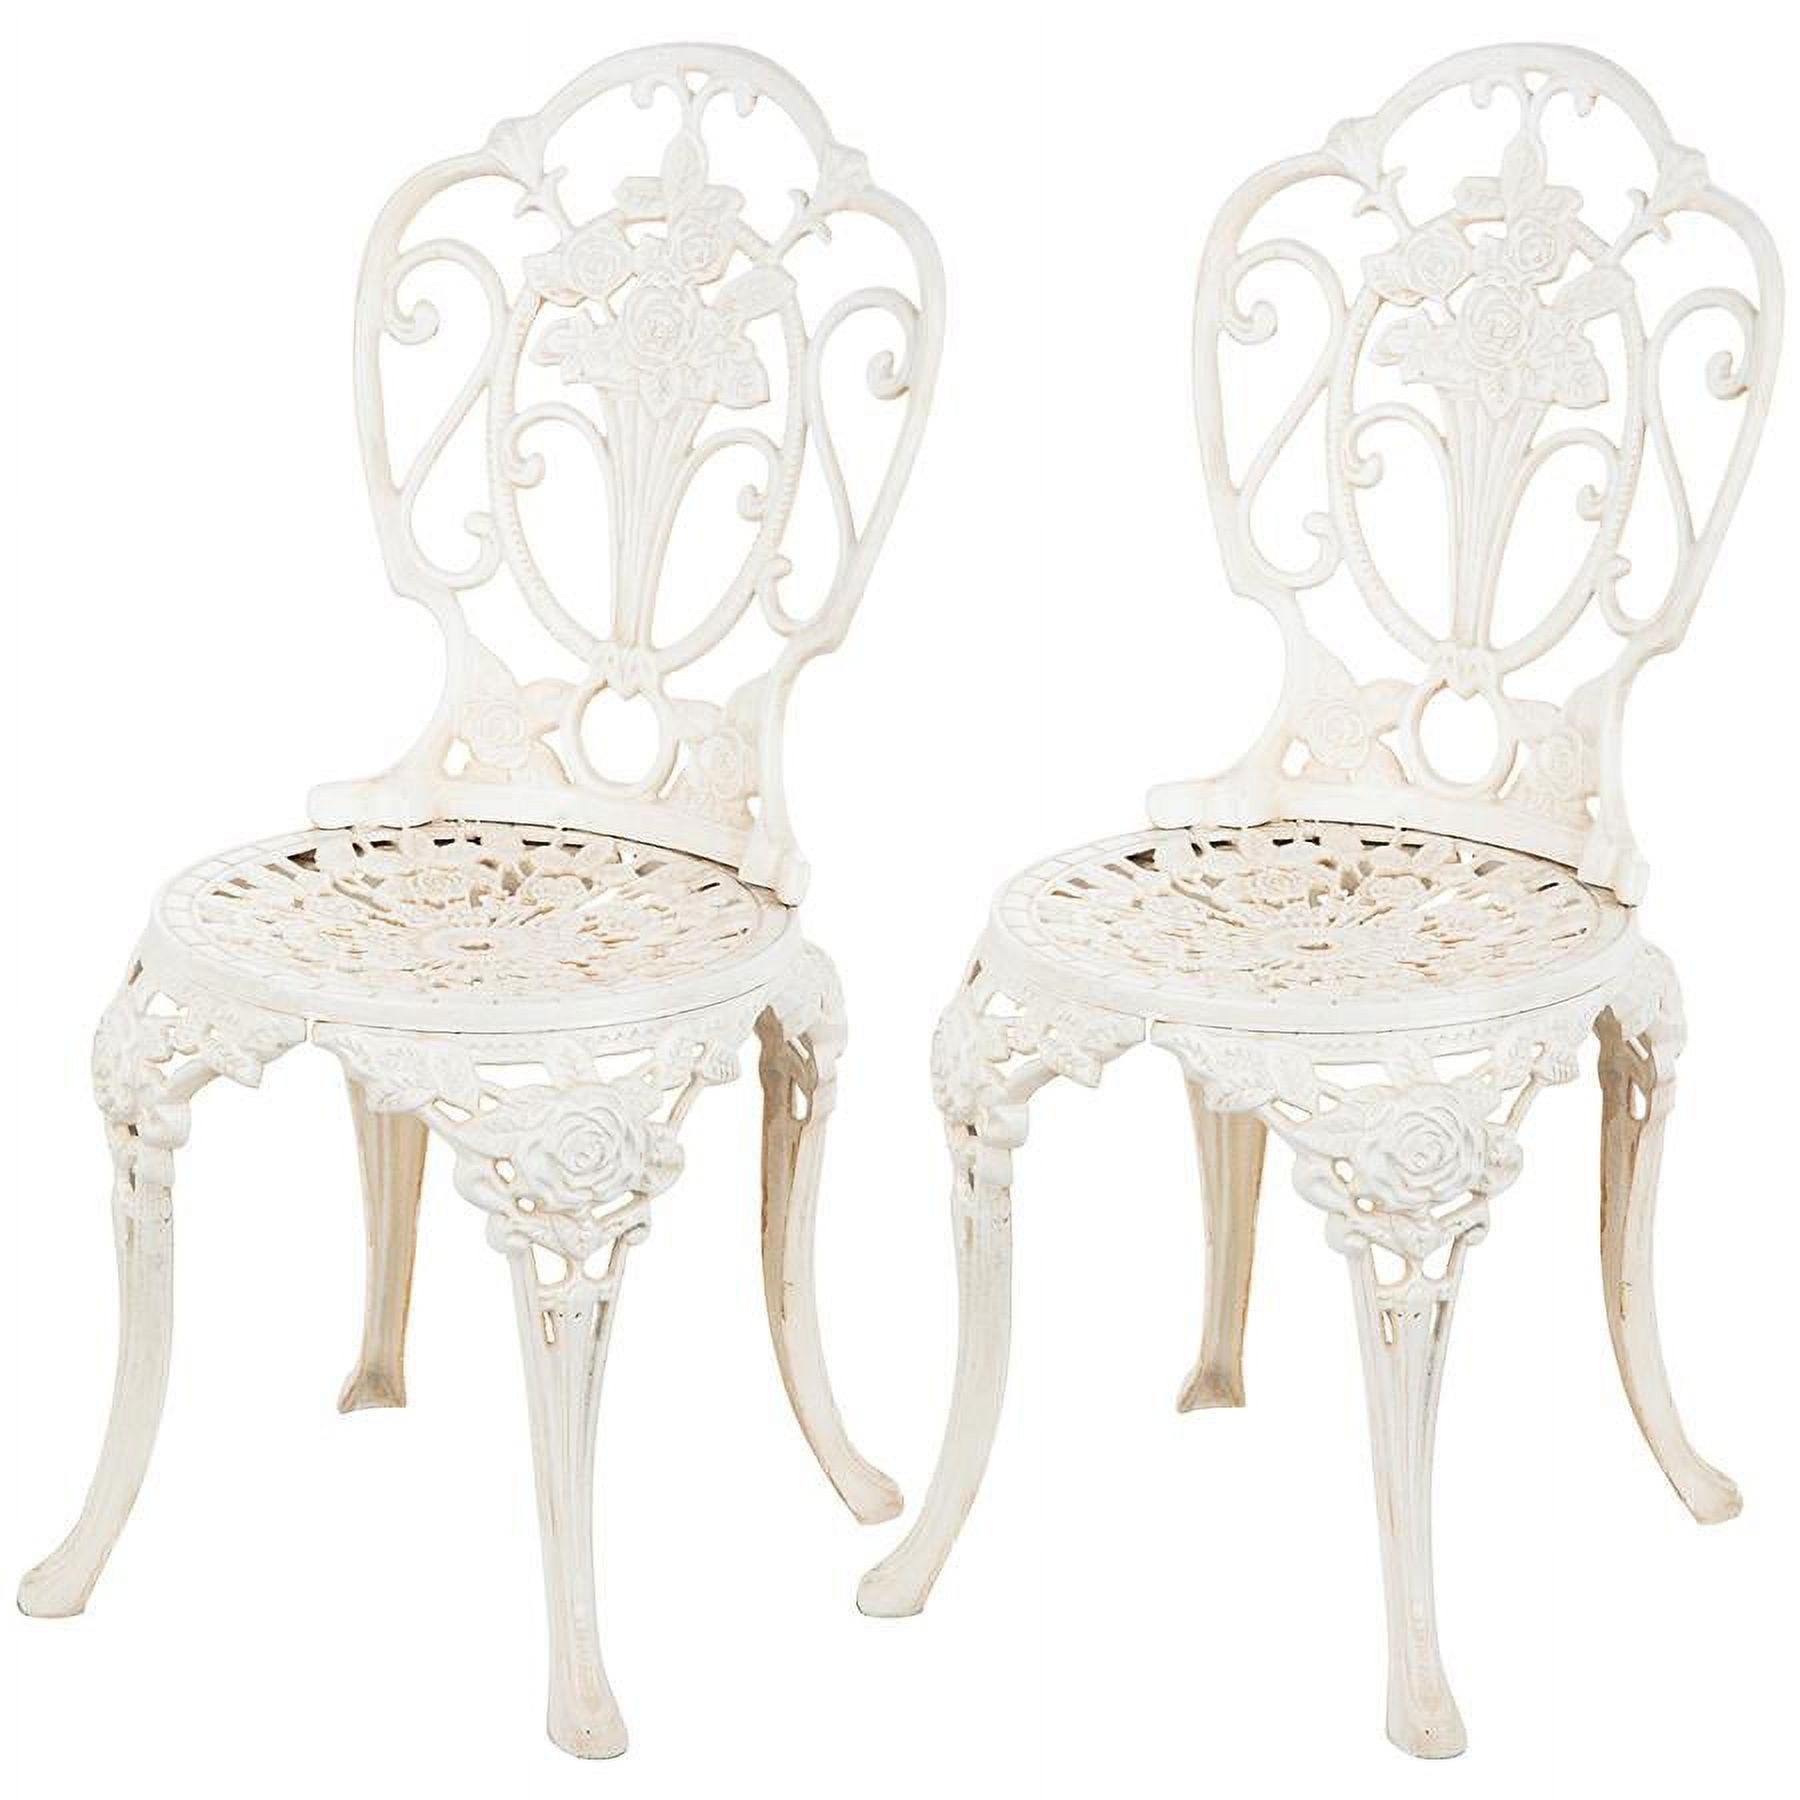 Design Toscano Villa Ravello Rose Garden Cast Iron Bistro Chair: Set of Two - image 2 of 3